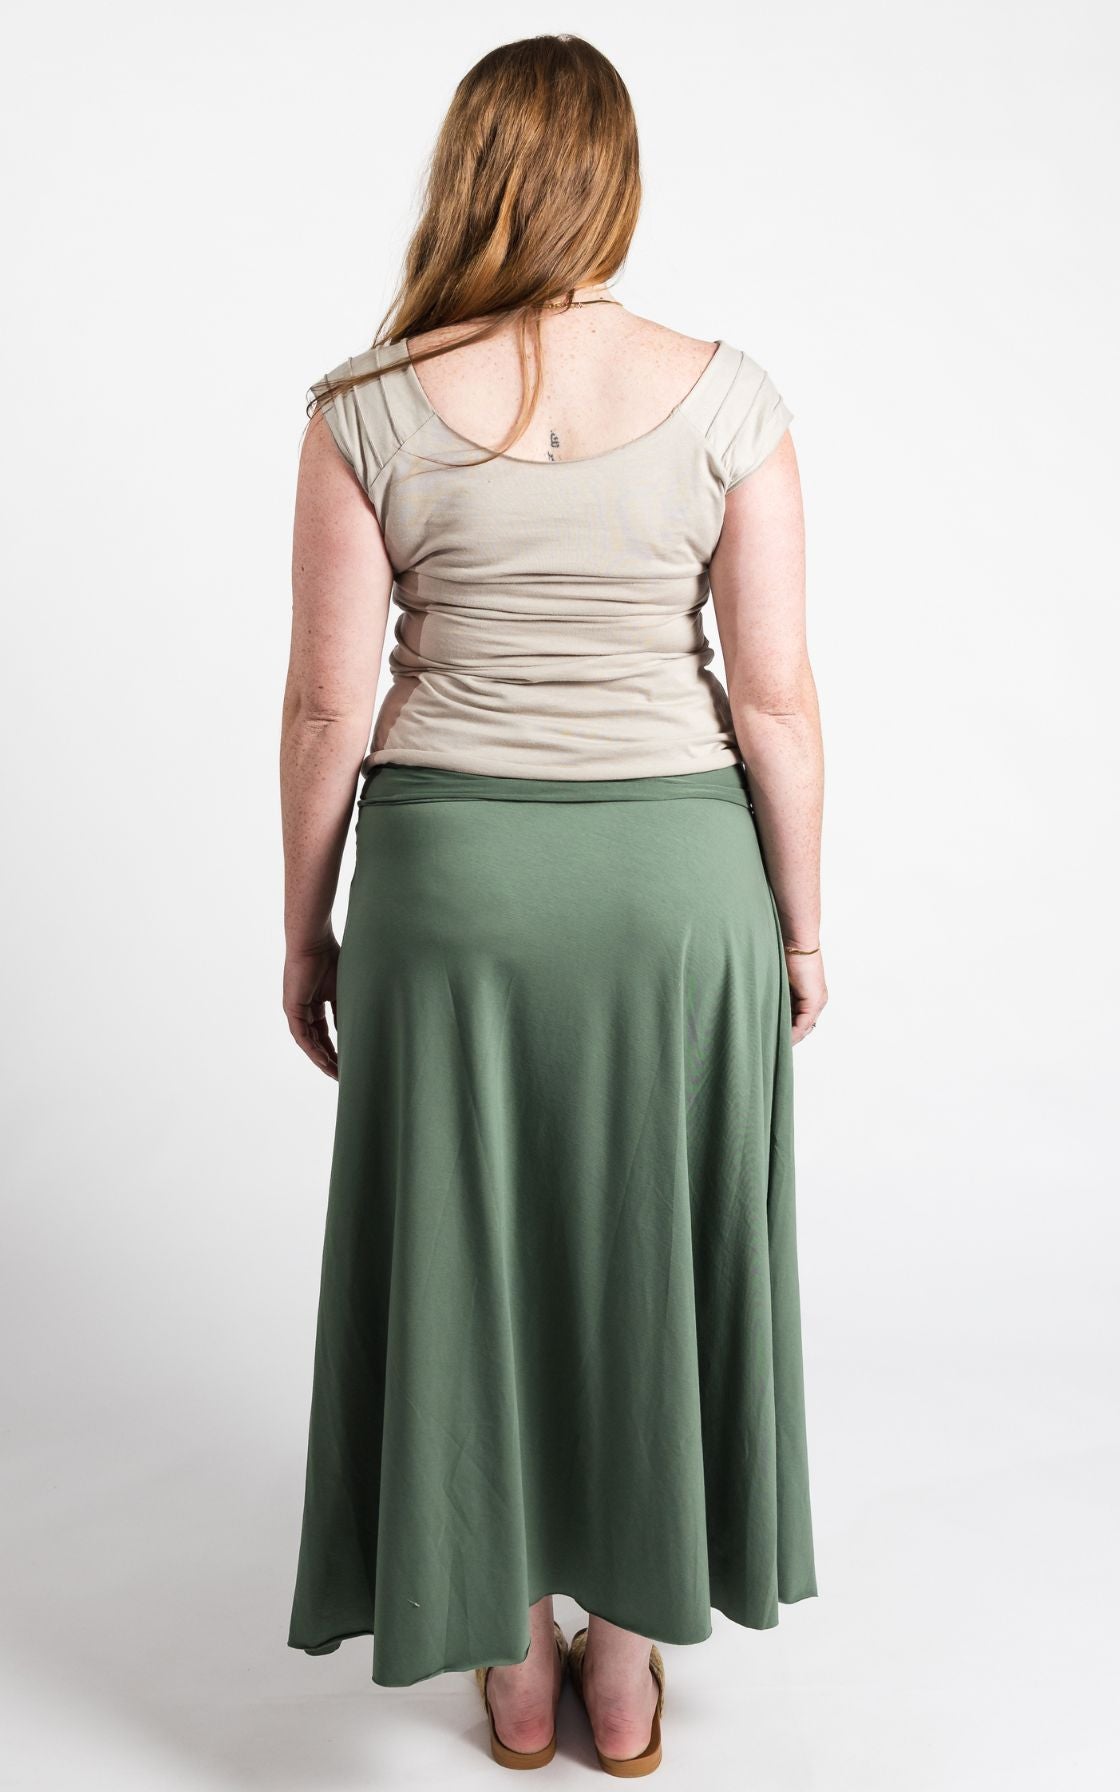 Surya Australia Organic Cotton 'Sonder' Skirt made in Nepal - Ocean